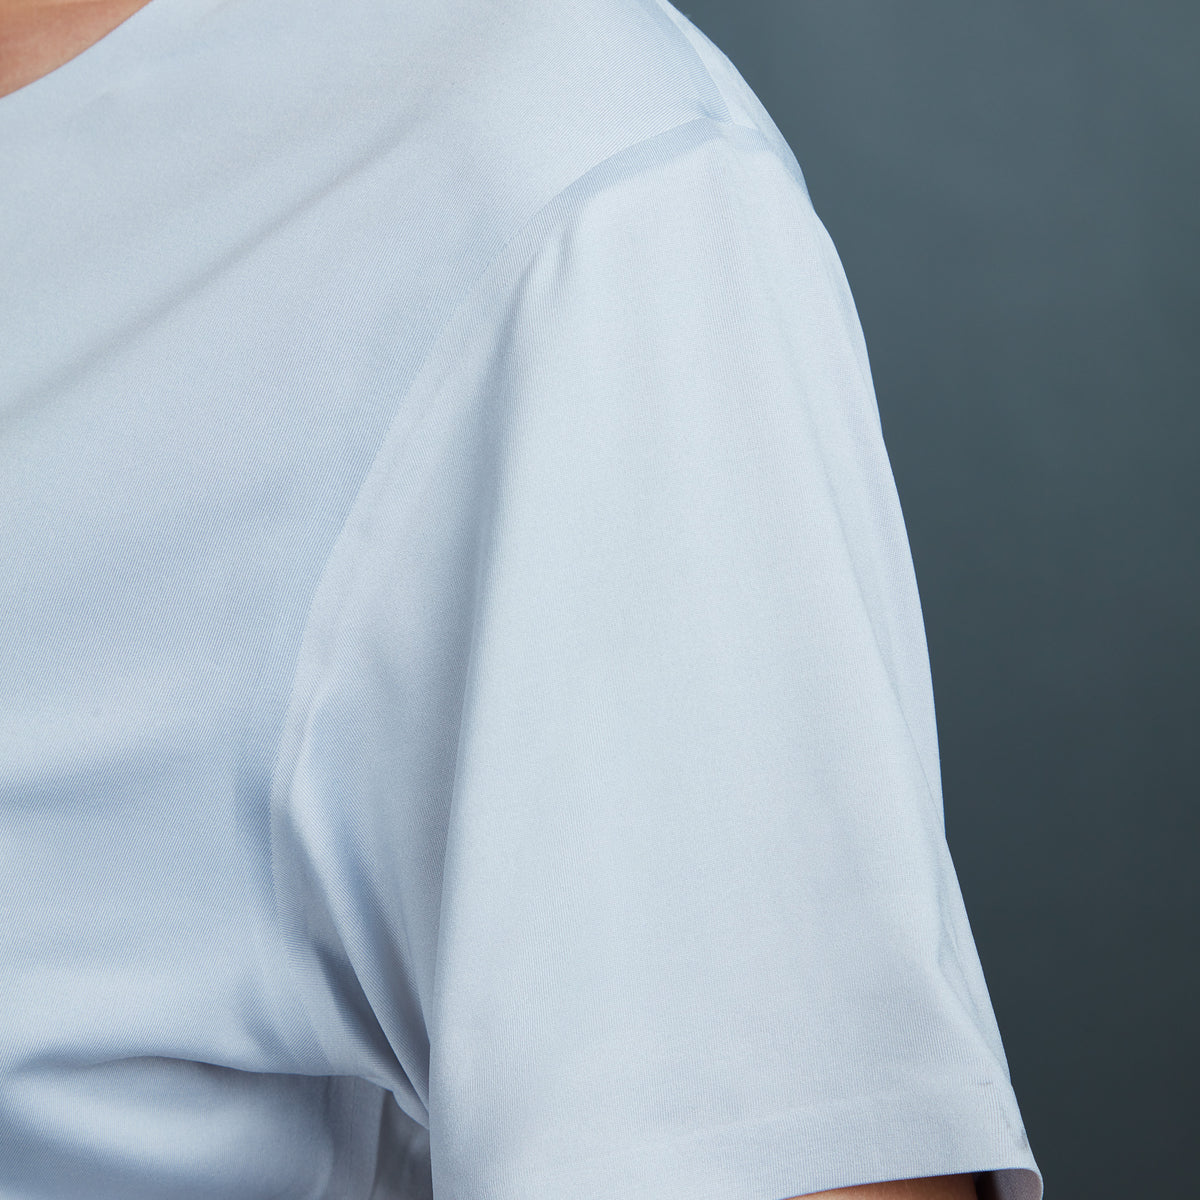 Layer-X Short Sleeve t-shirt / Activewear Series by Graphene-X - Graphene X